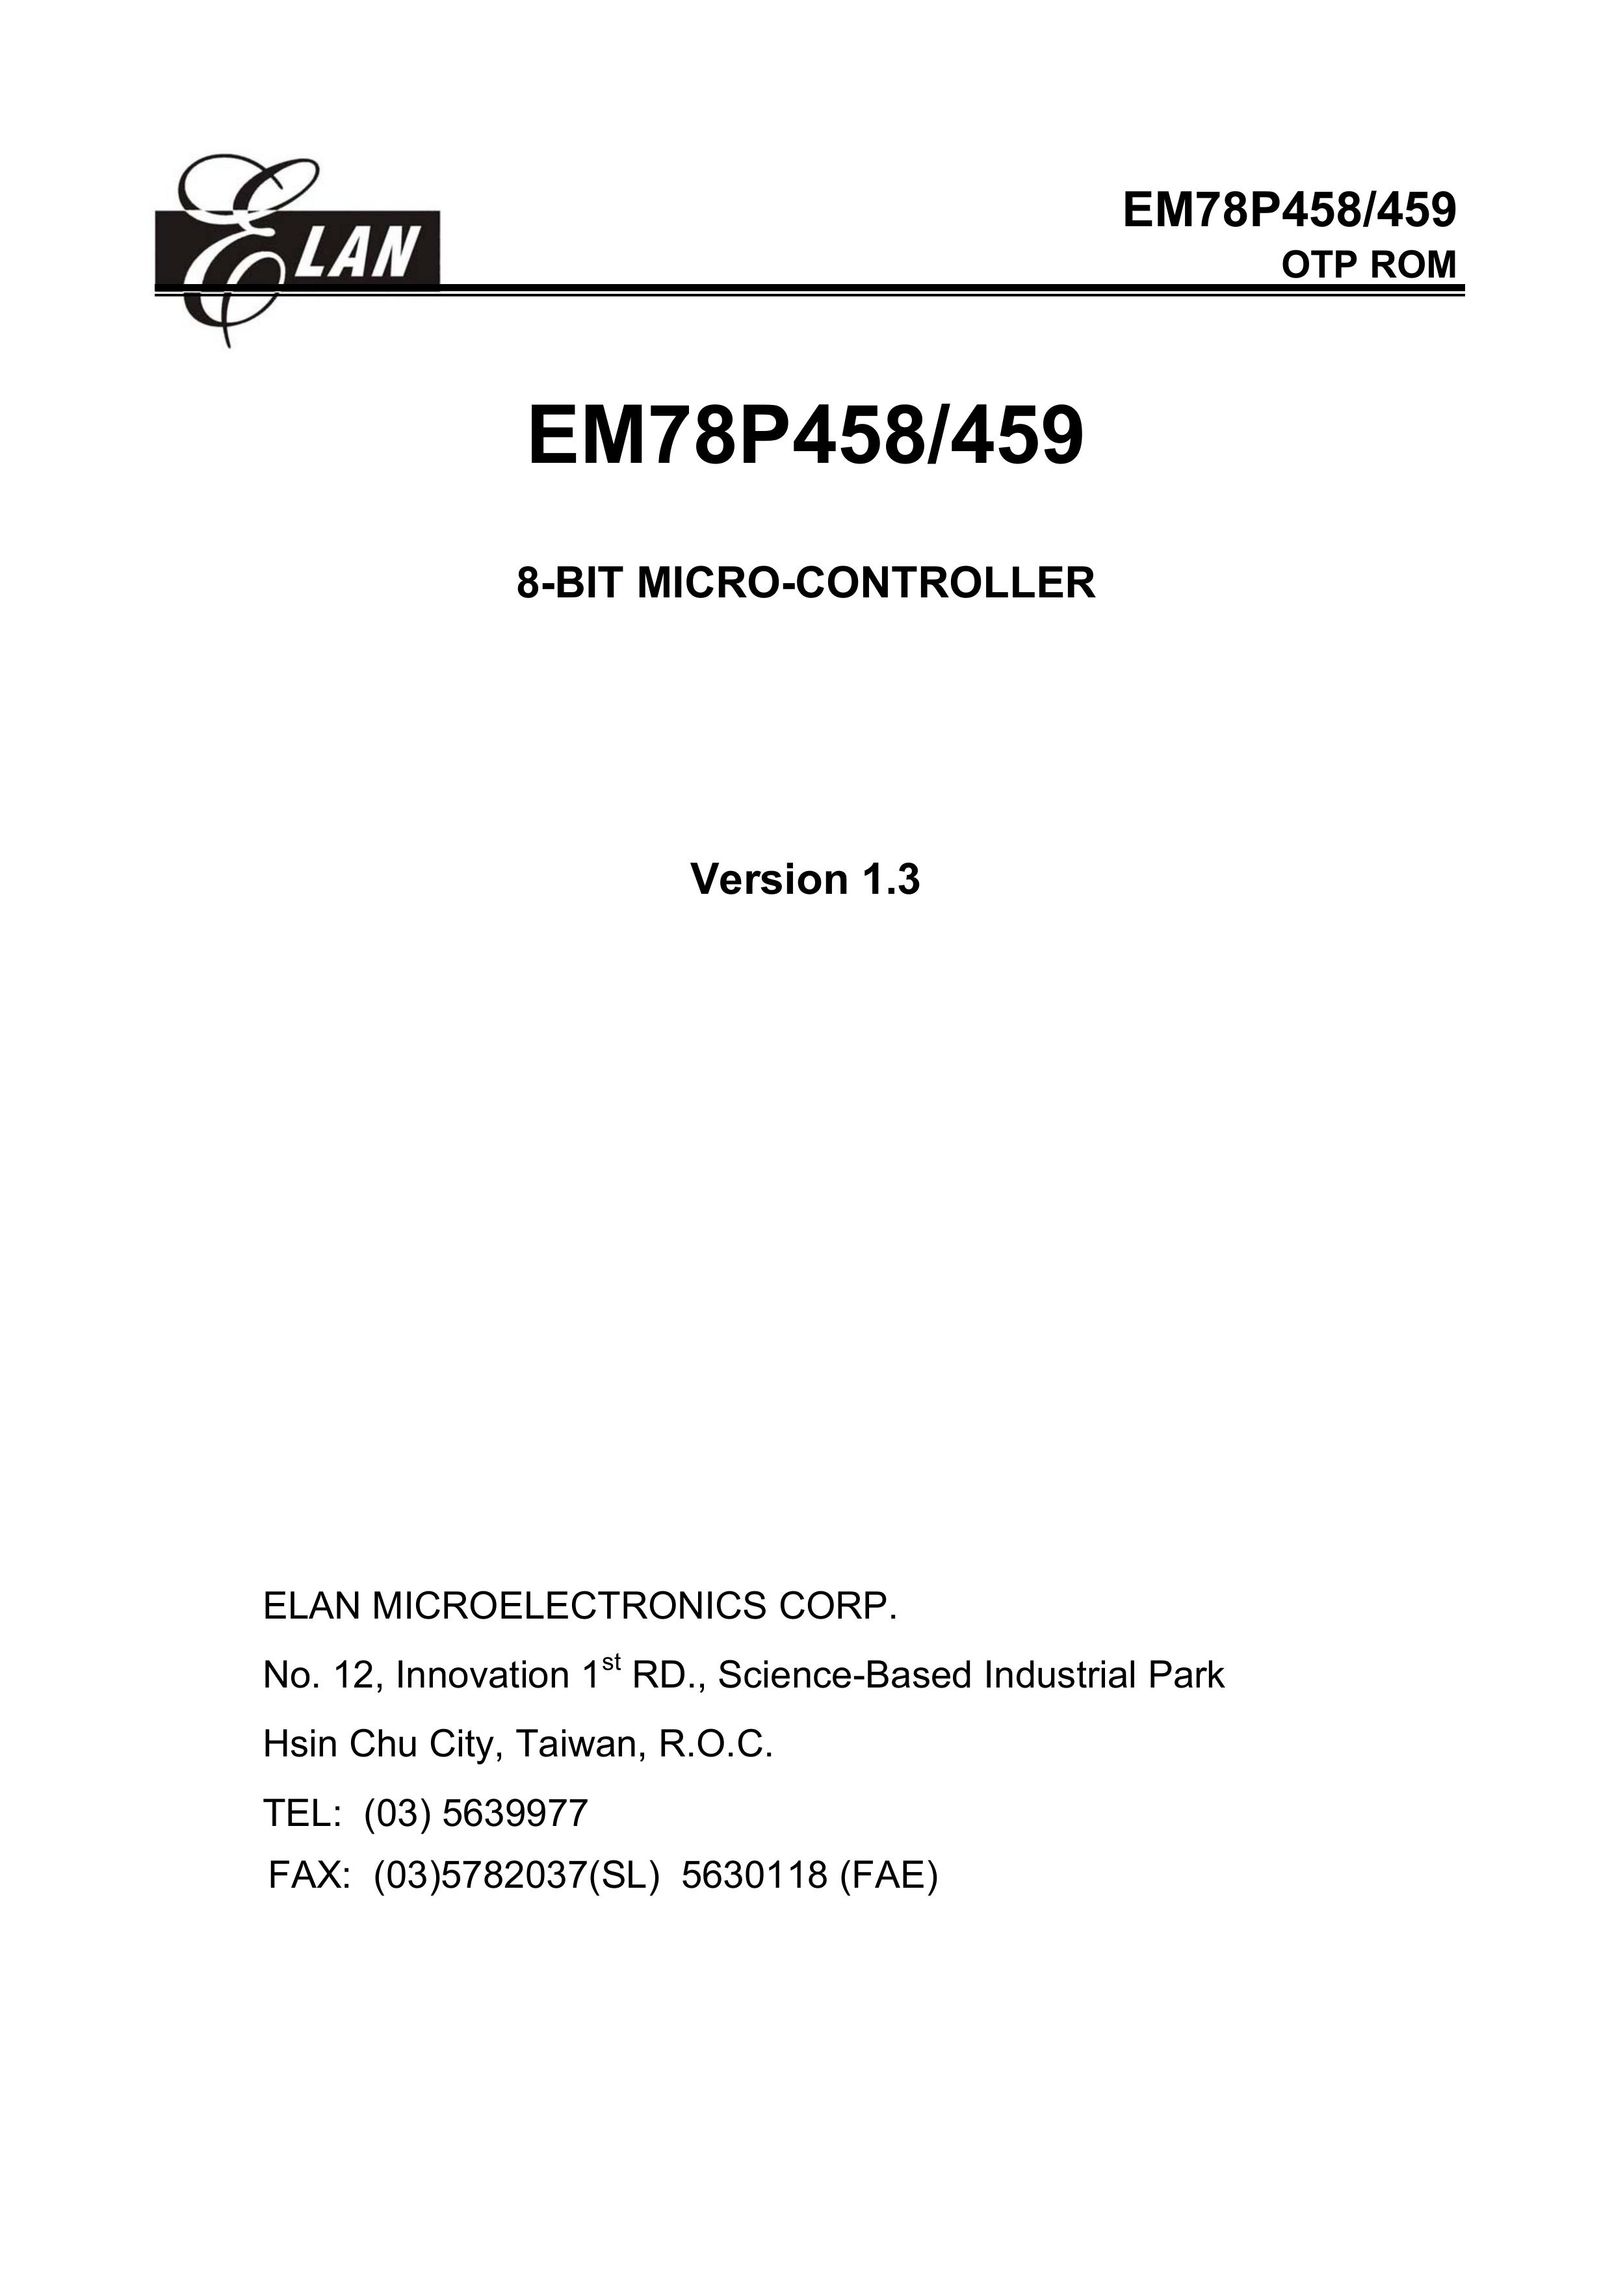 ELAN Home Systems EM78P459 Network Card User Manual